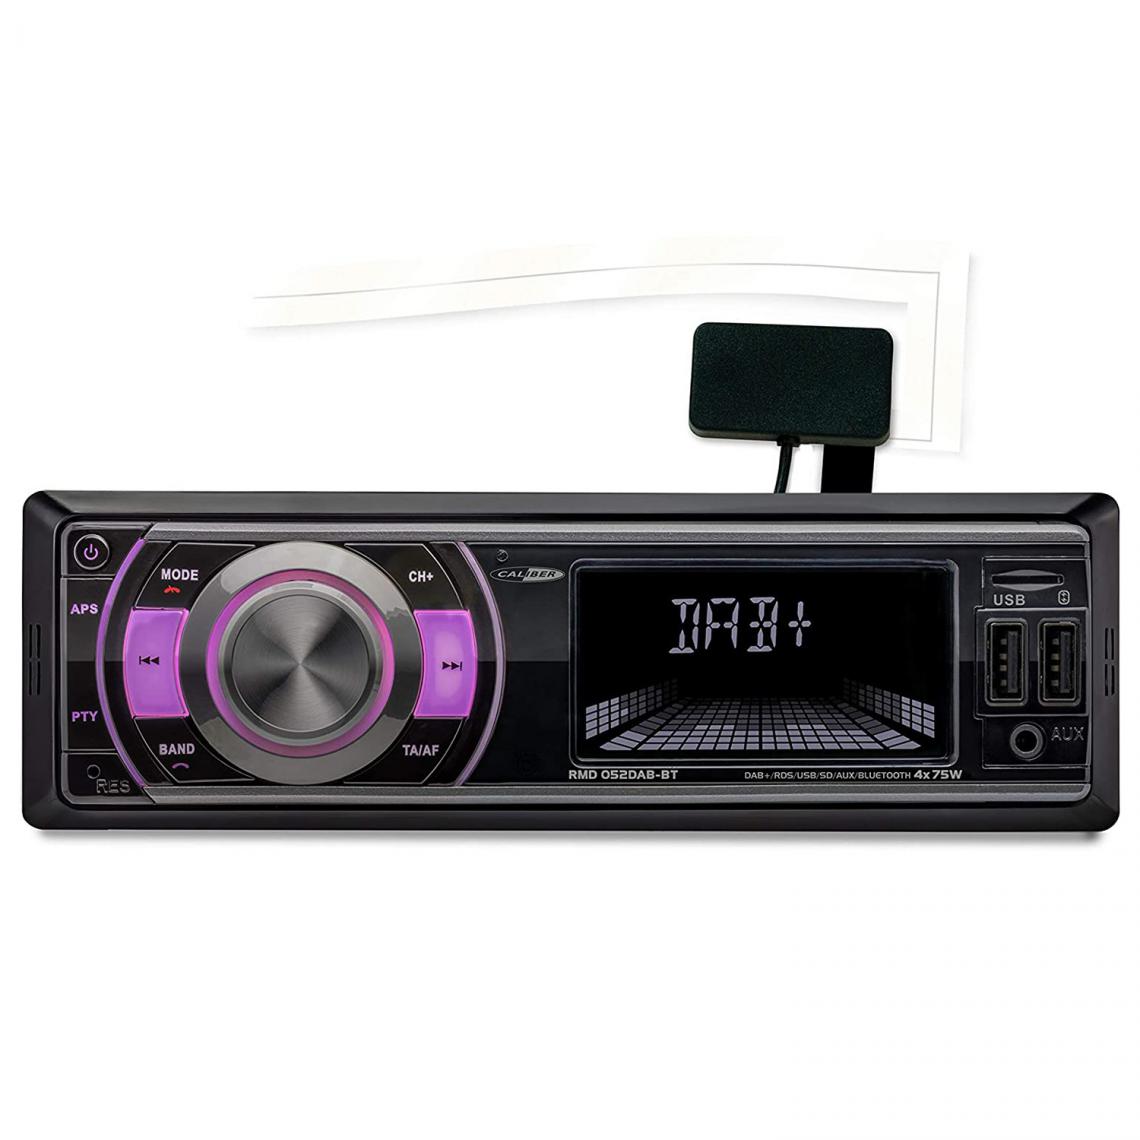 Caliber - Autoradio Caliber RMD052DAB-BT - Lecteur USB/SD avec Tuner FM, Dab+ et Bluetooth - 4 X 75w - Radio